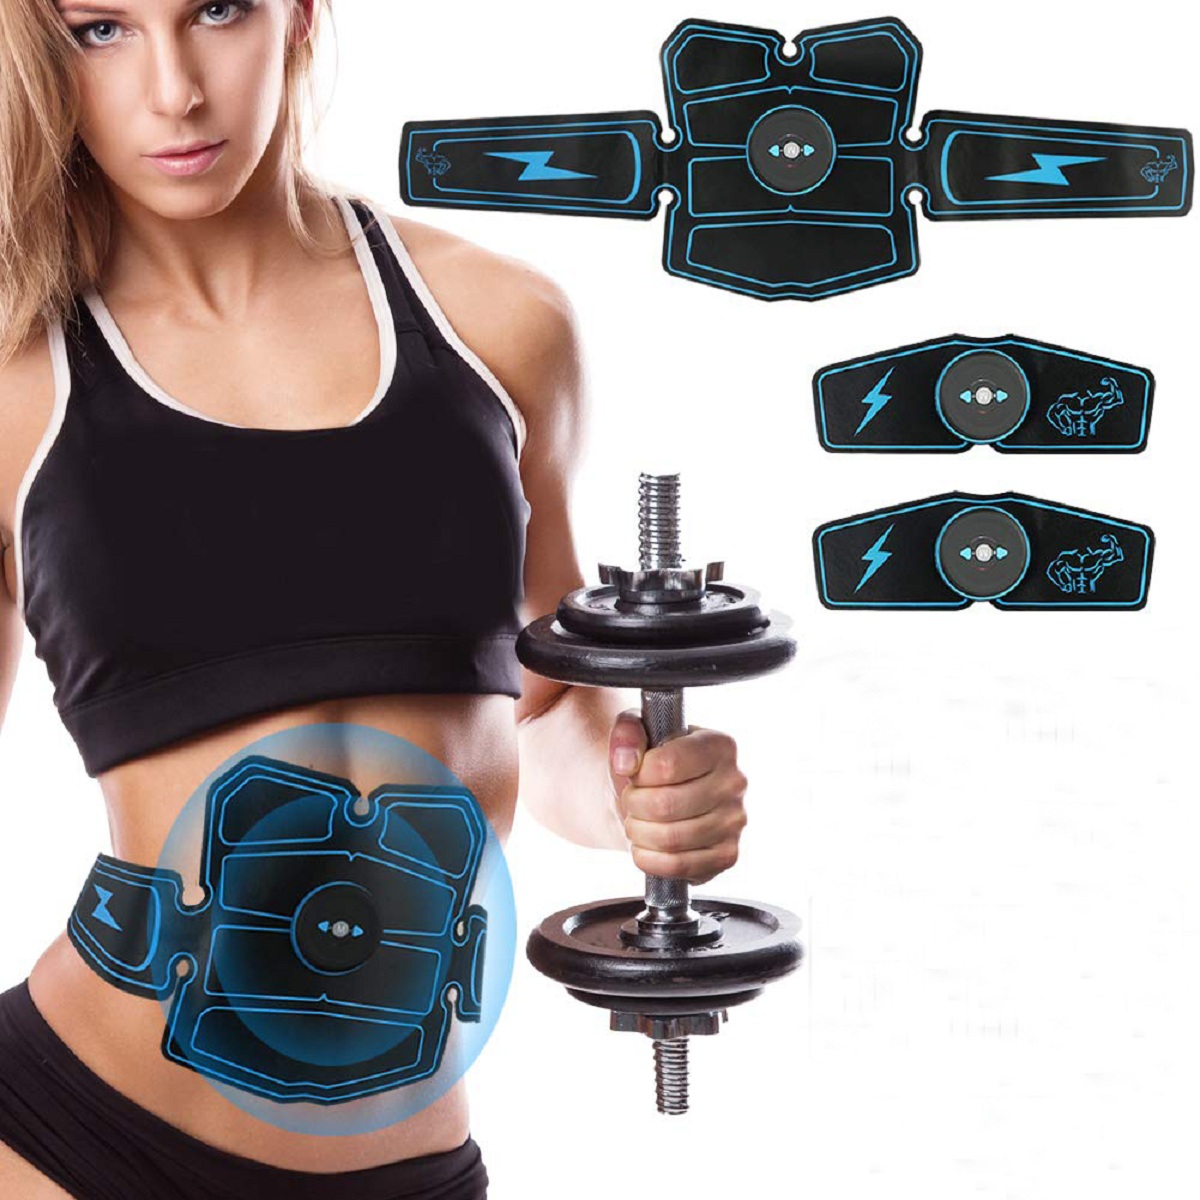 

Брюшная мышечная паста Intelligent Фитнес Инструмент для упражнений Body Trainer Талия Тренажер для сна Lazy Muscle Home